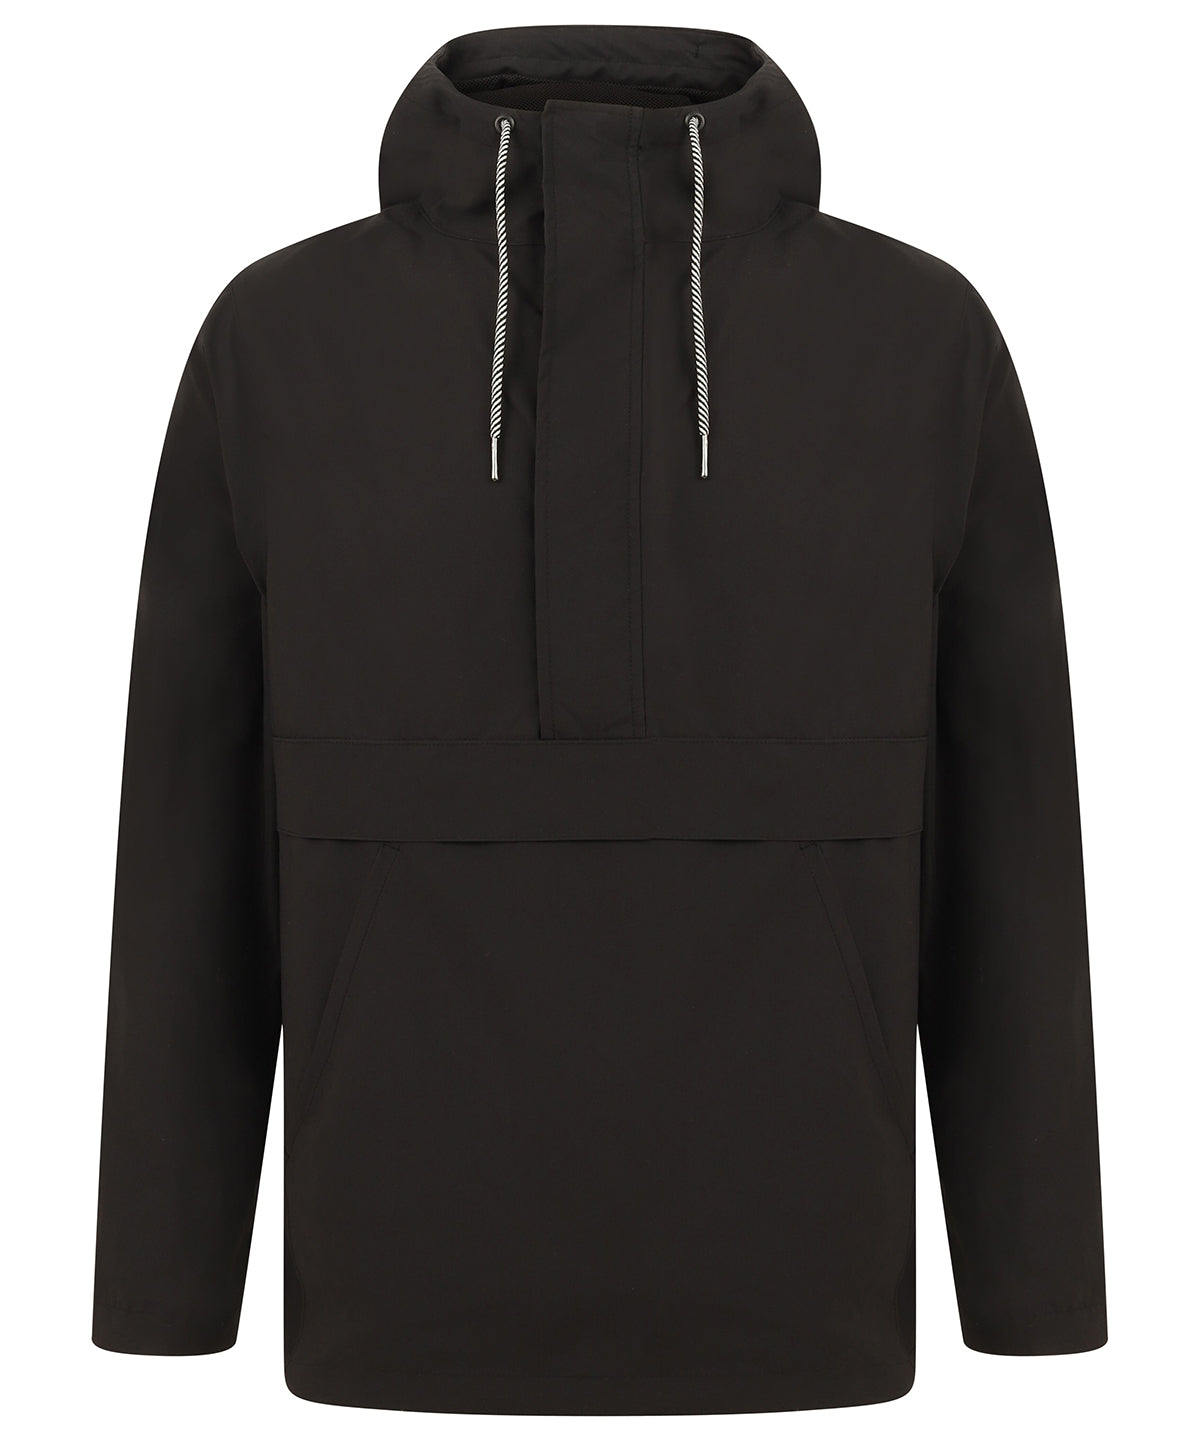 Personalised Jackets - Black Front Row Pullover half-zip jacket